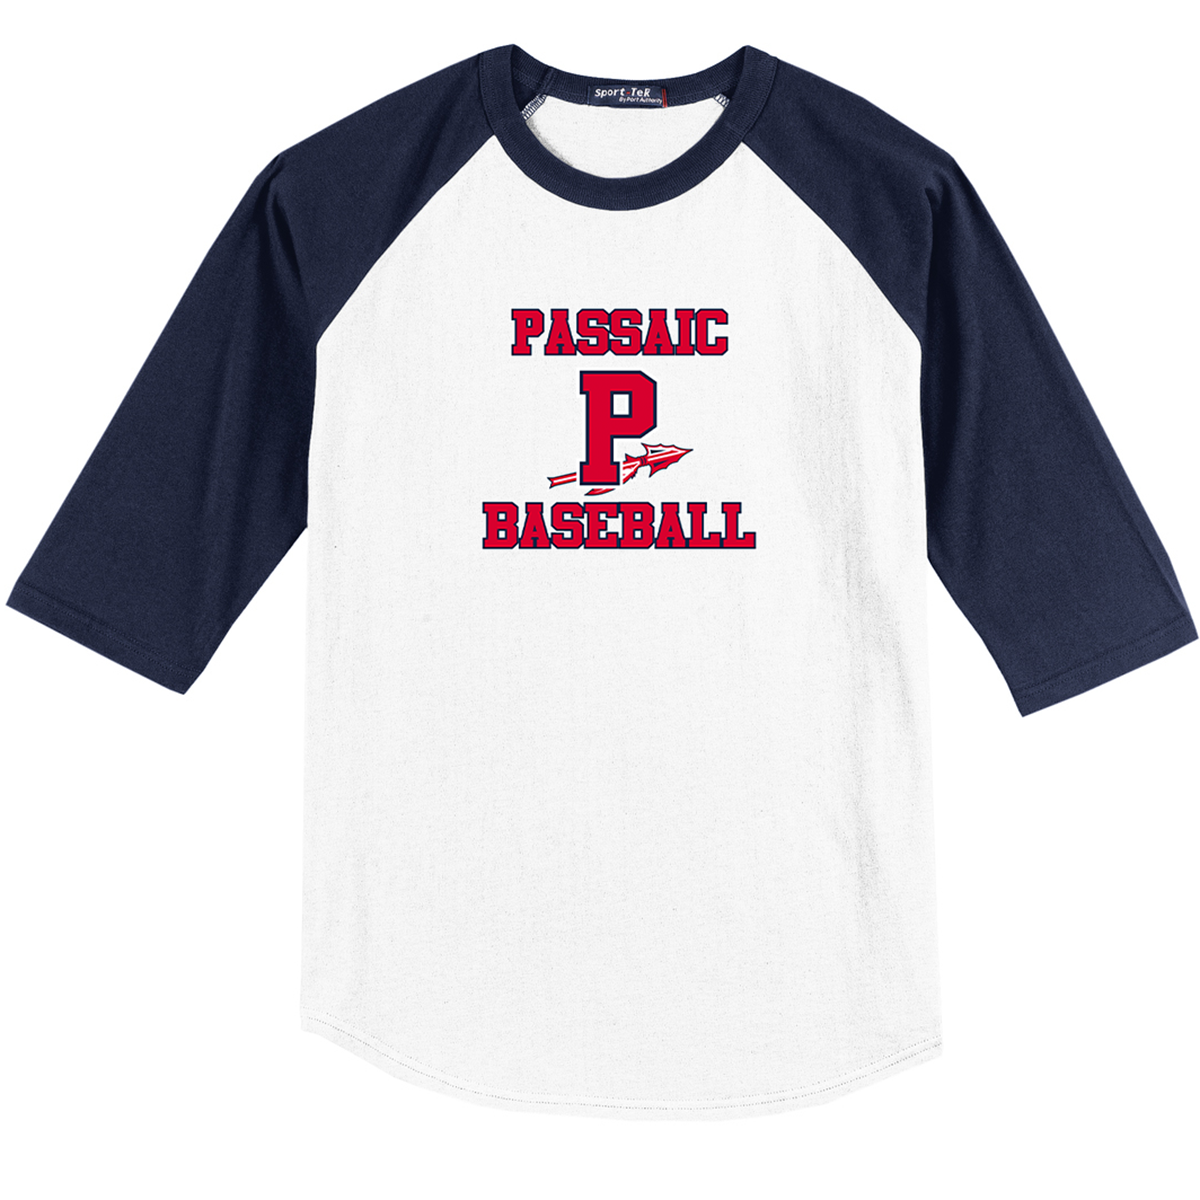 Passaic Indians Baseball 3/4 Sleeve Baseball Shirt